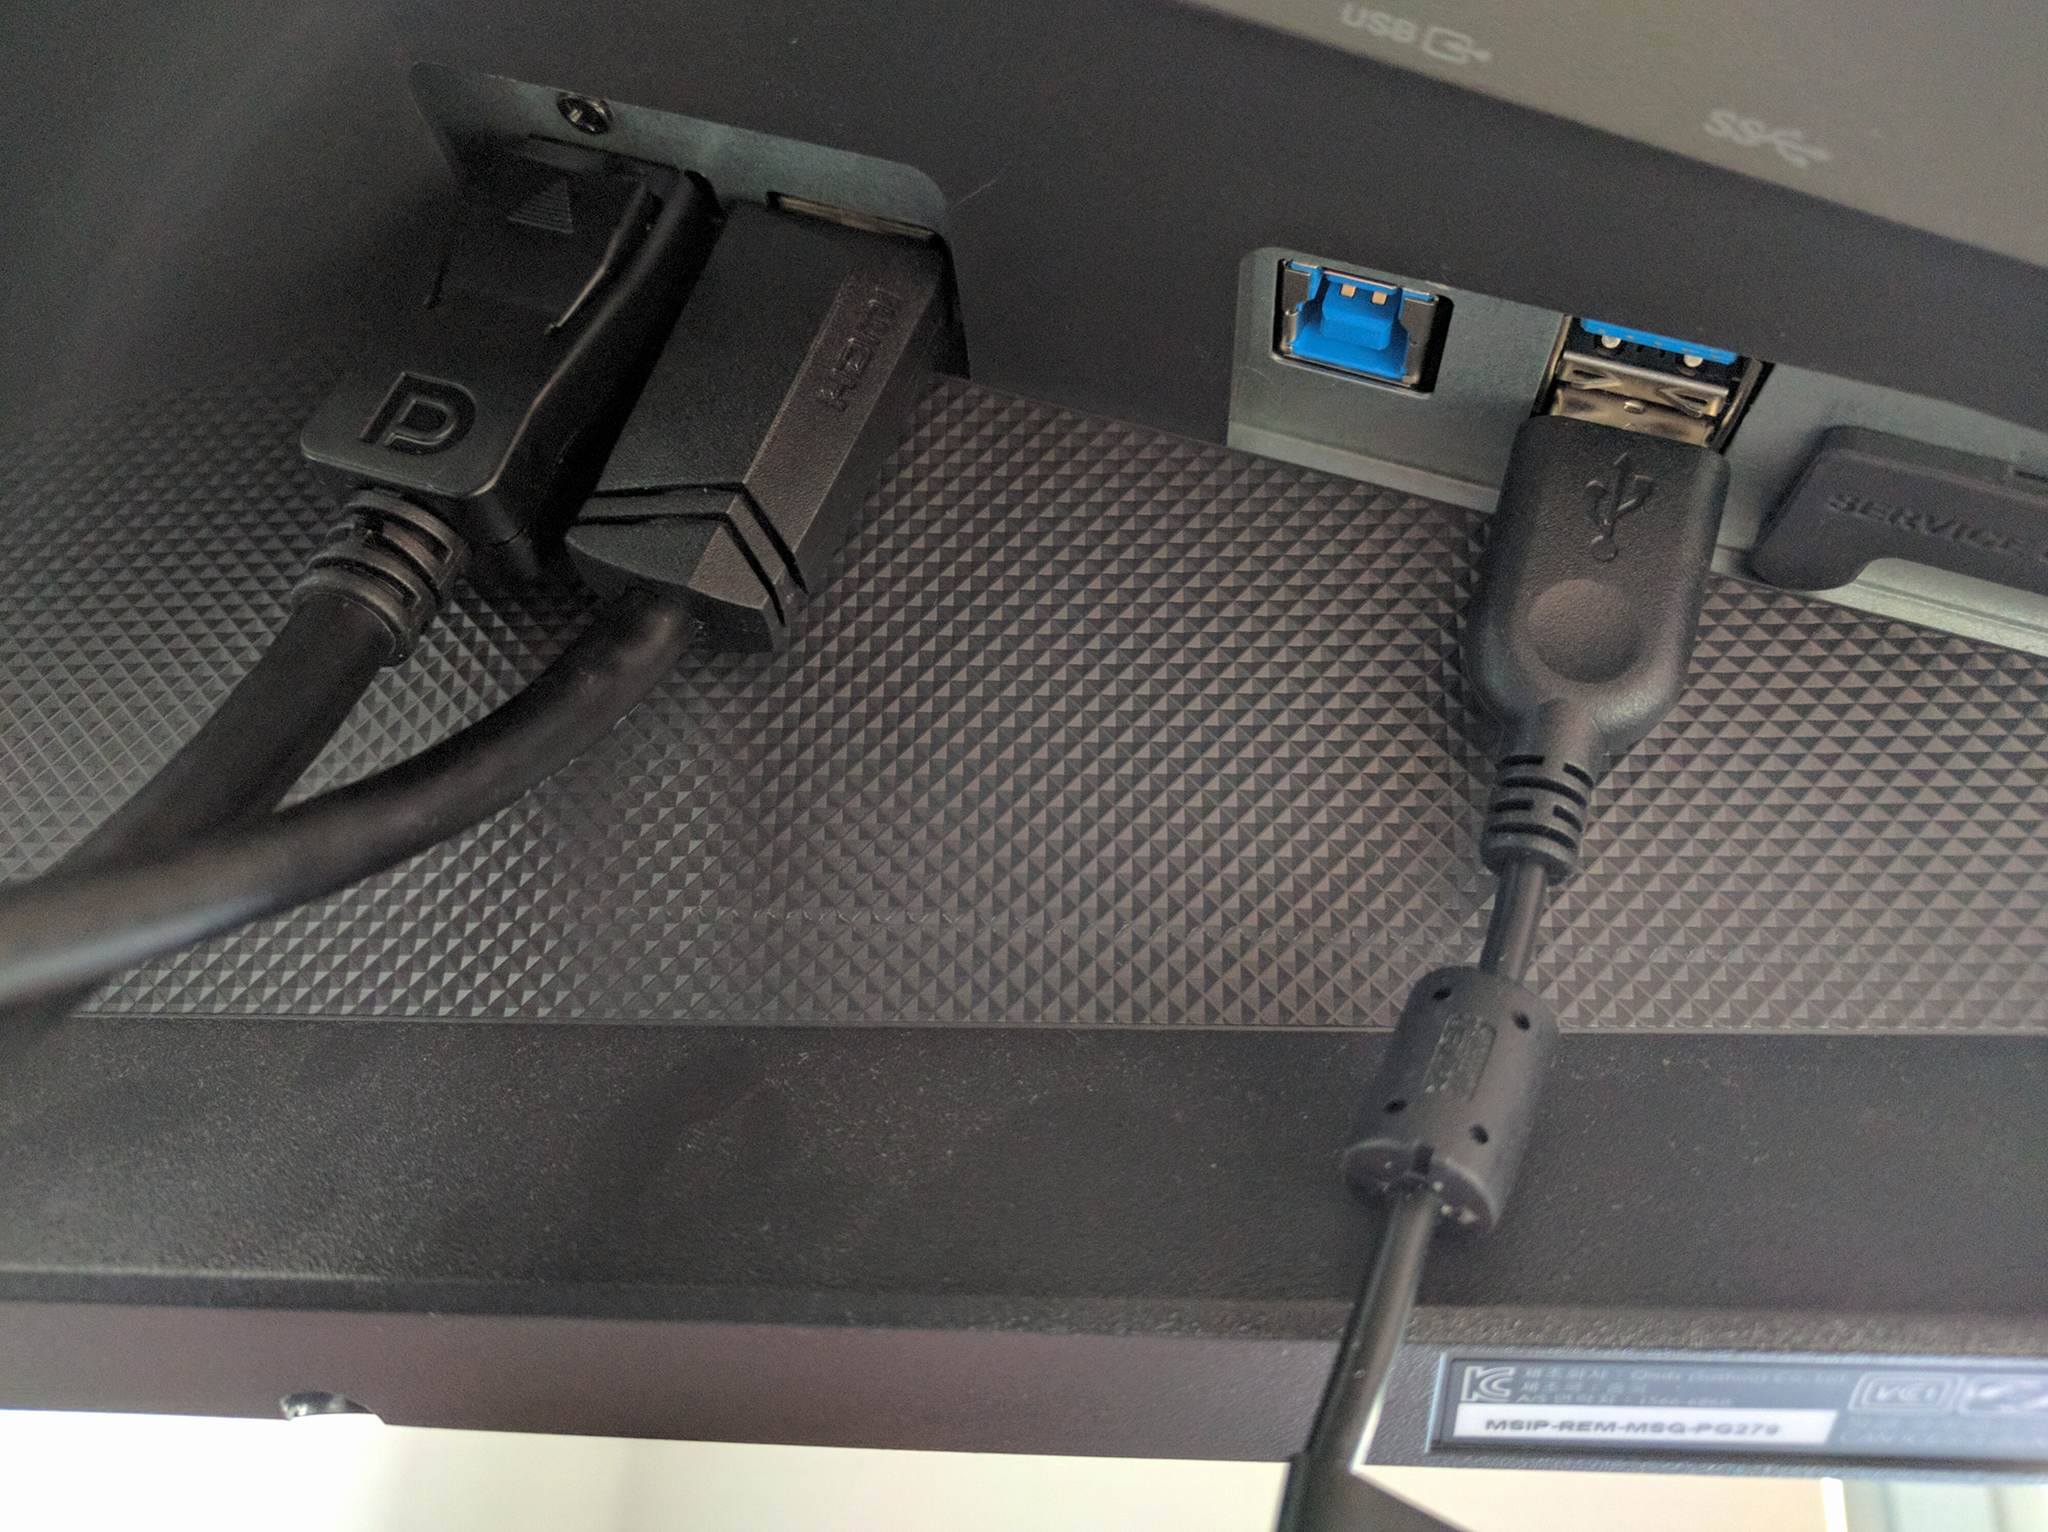 PG279Q - USB - Displays - Linus Tech Tips